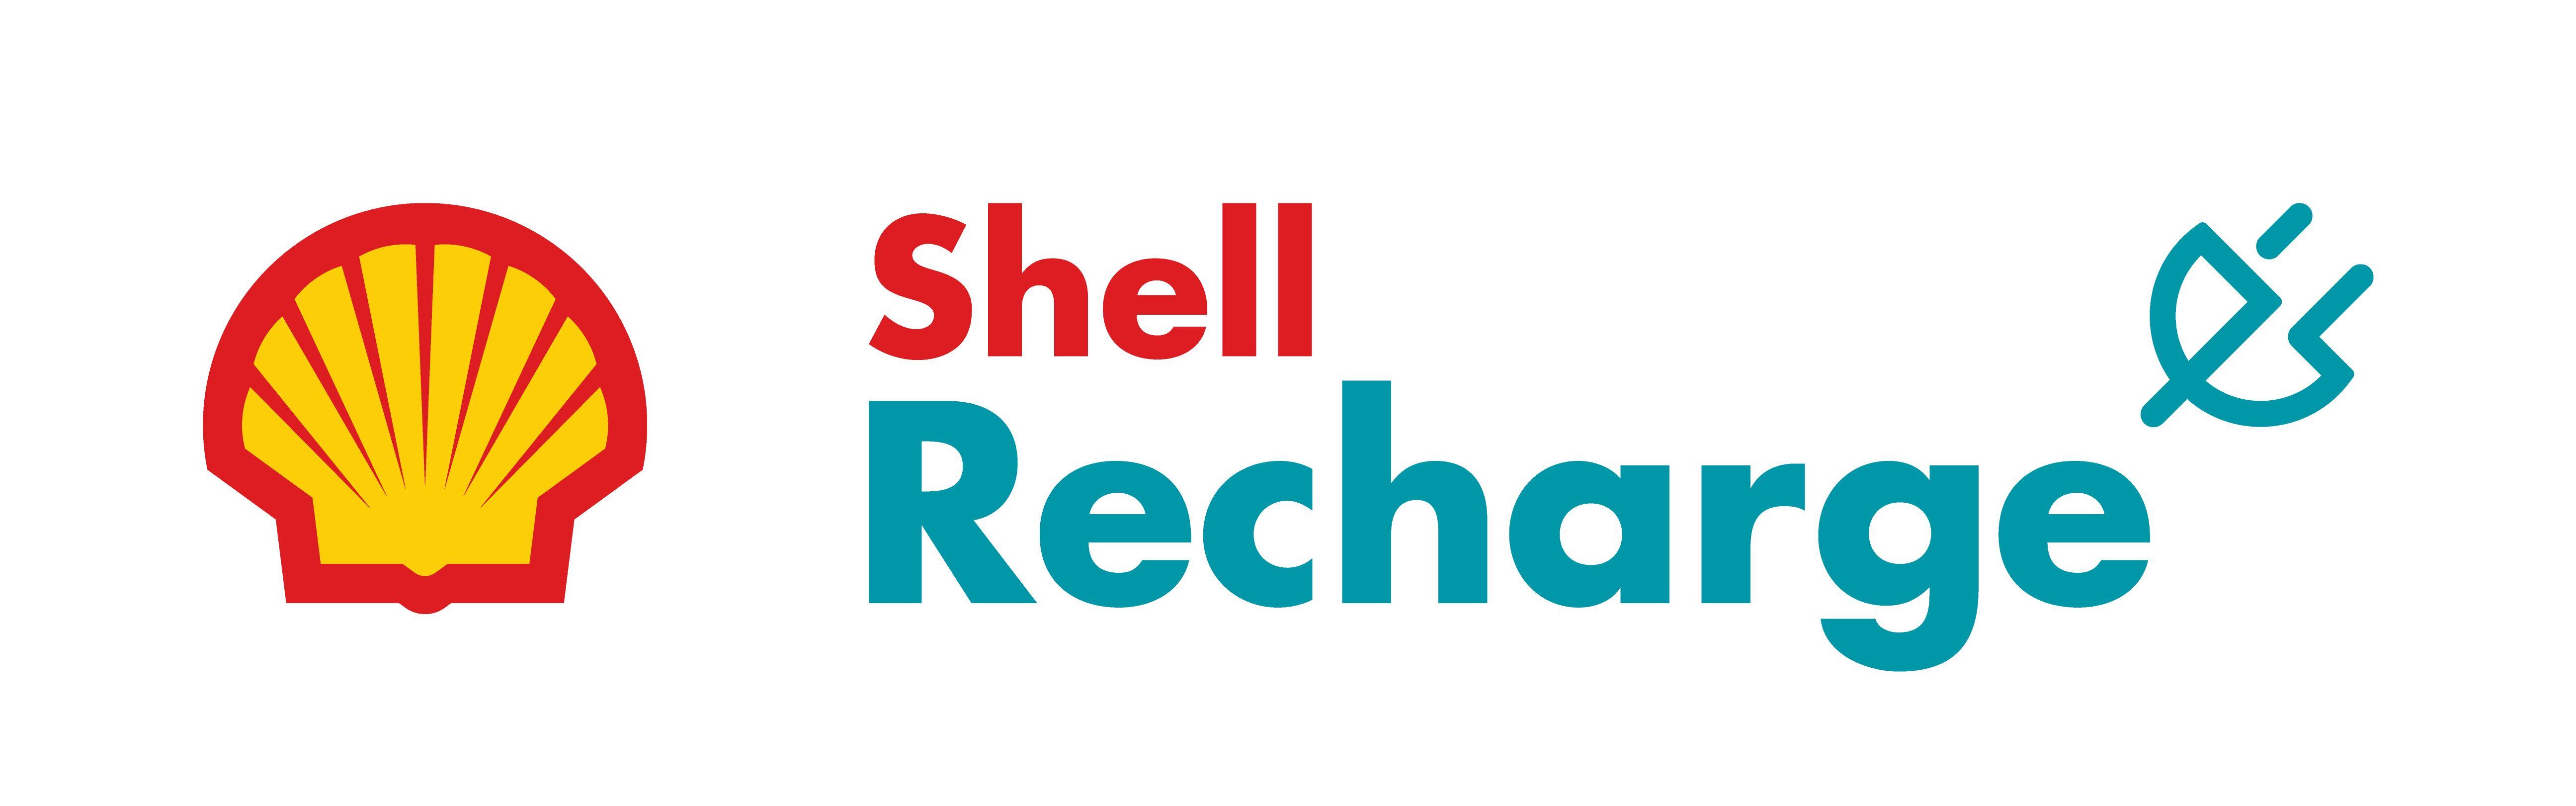 Shell Recharge logo and wordmark lockup